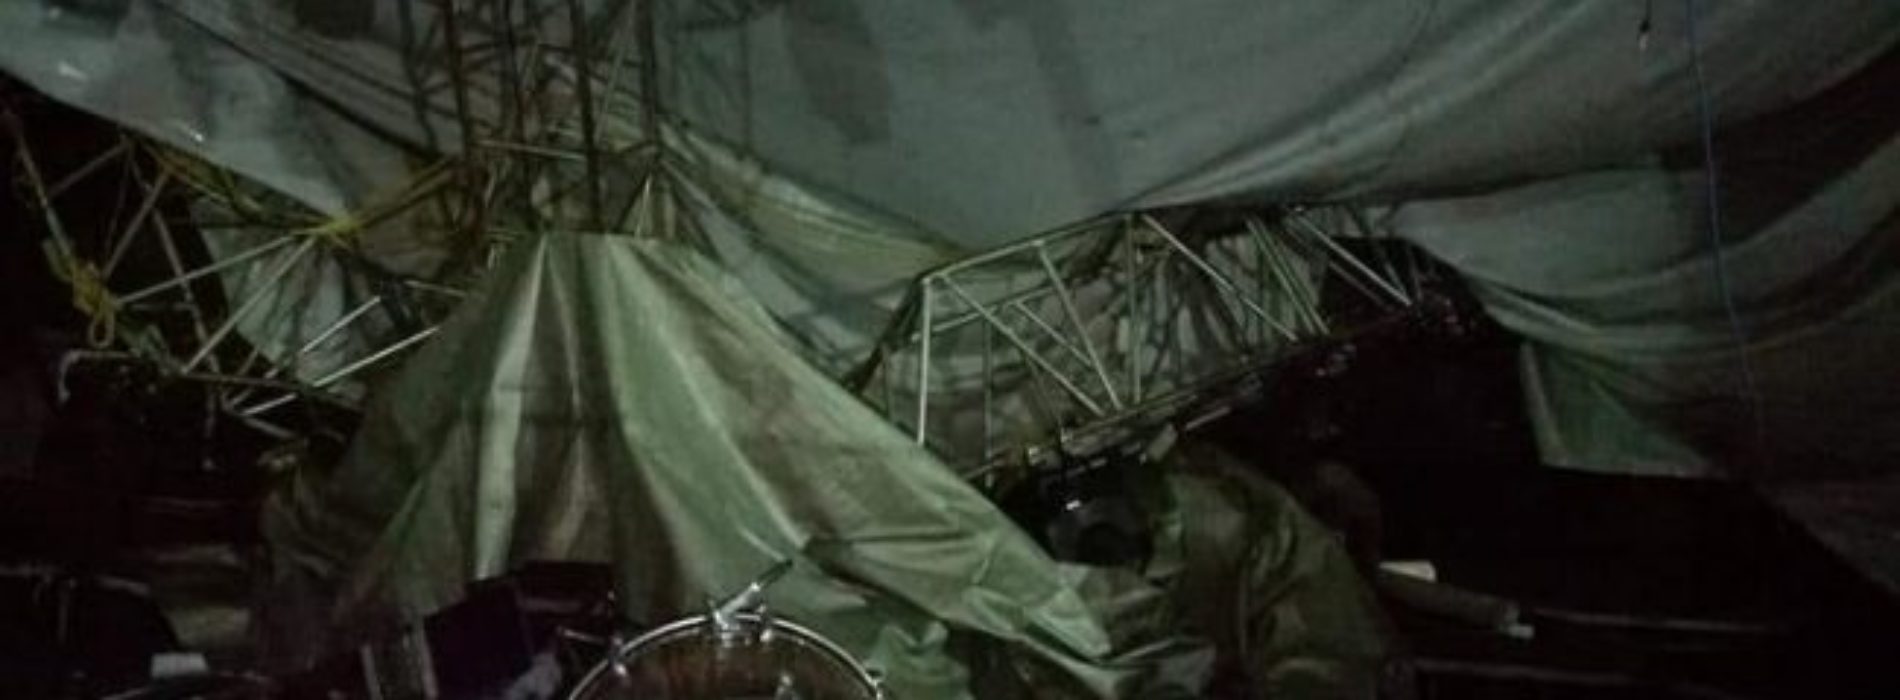 Tres lesionados deja colapso de escenario en San Agustín
Atenango: CEPCO